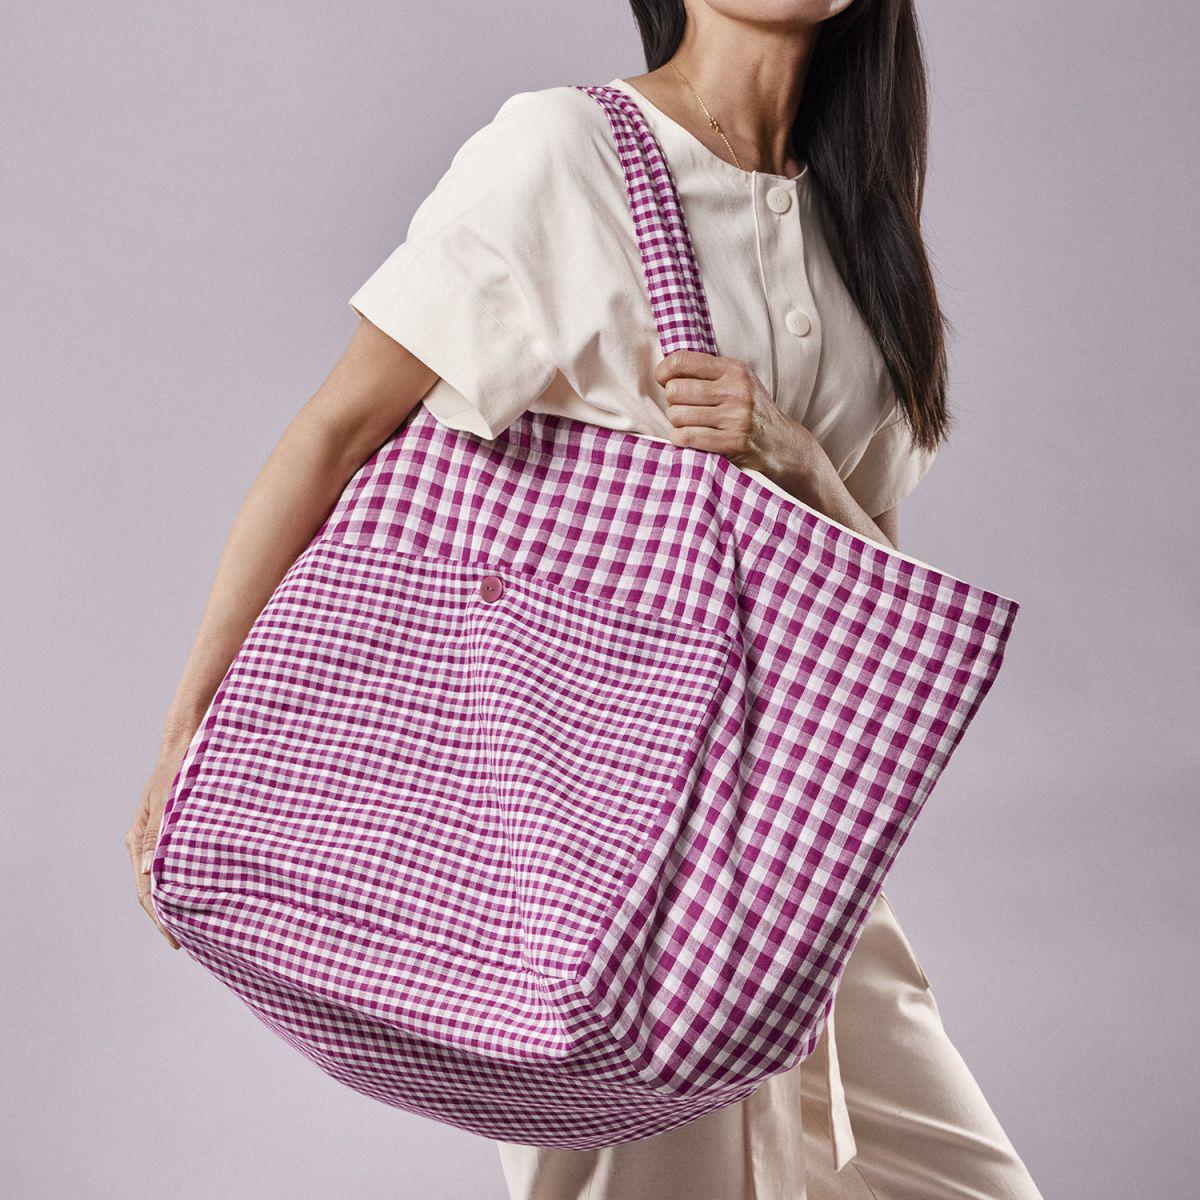 Atelier Brunette-LE Sac de Plage Beach Bag-sewing pattern-gather here online